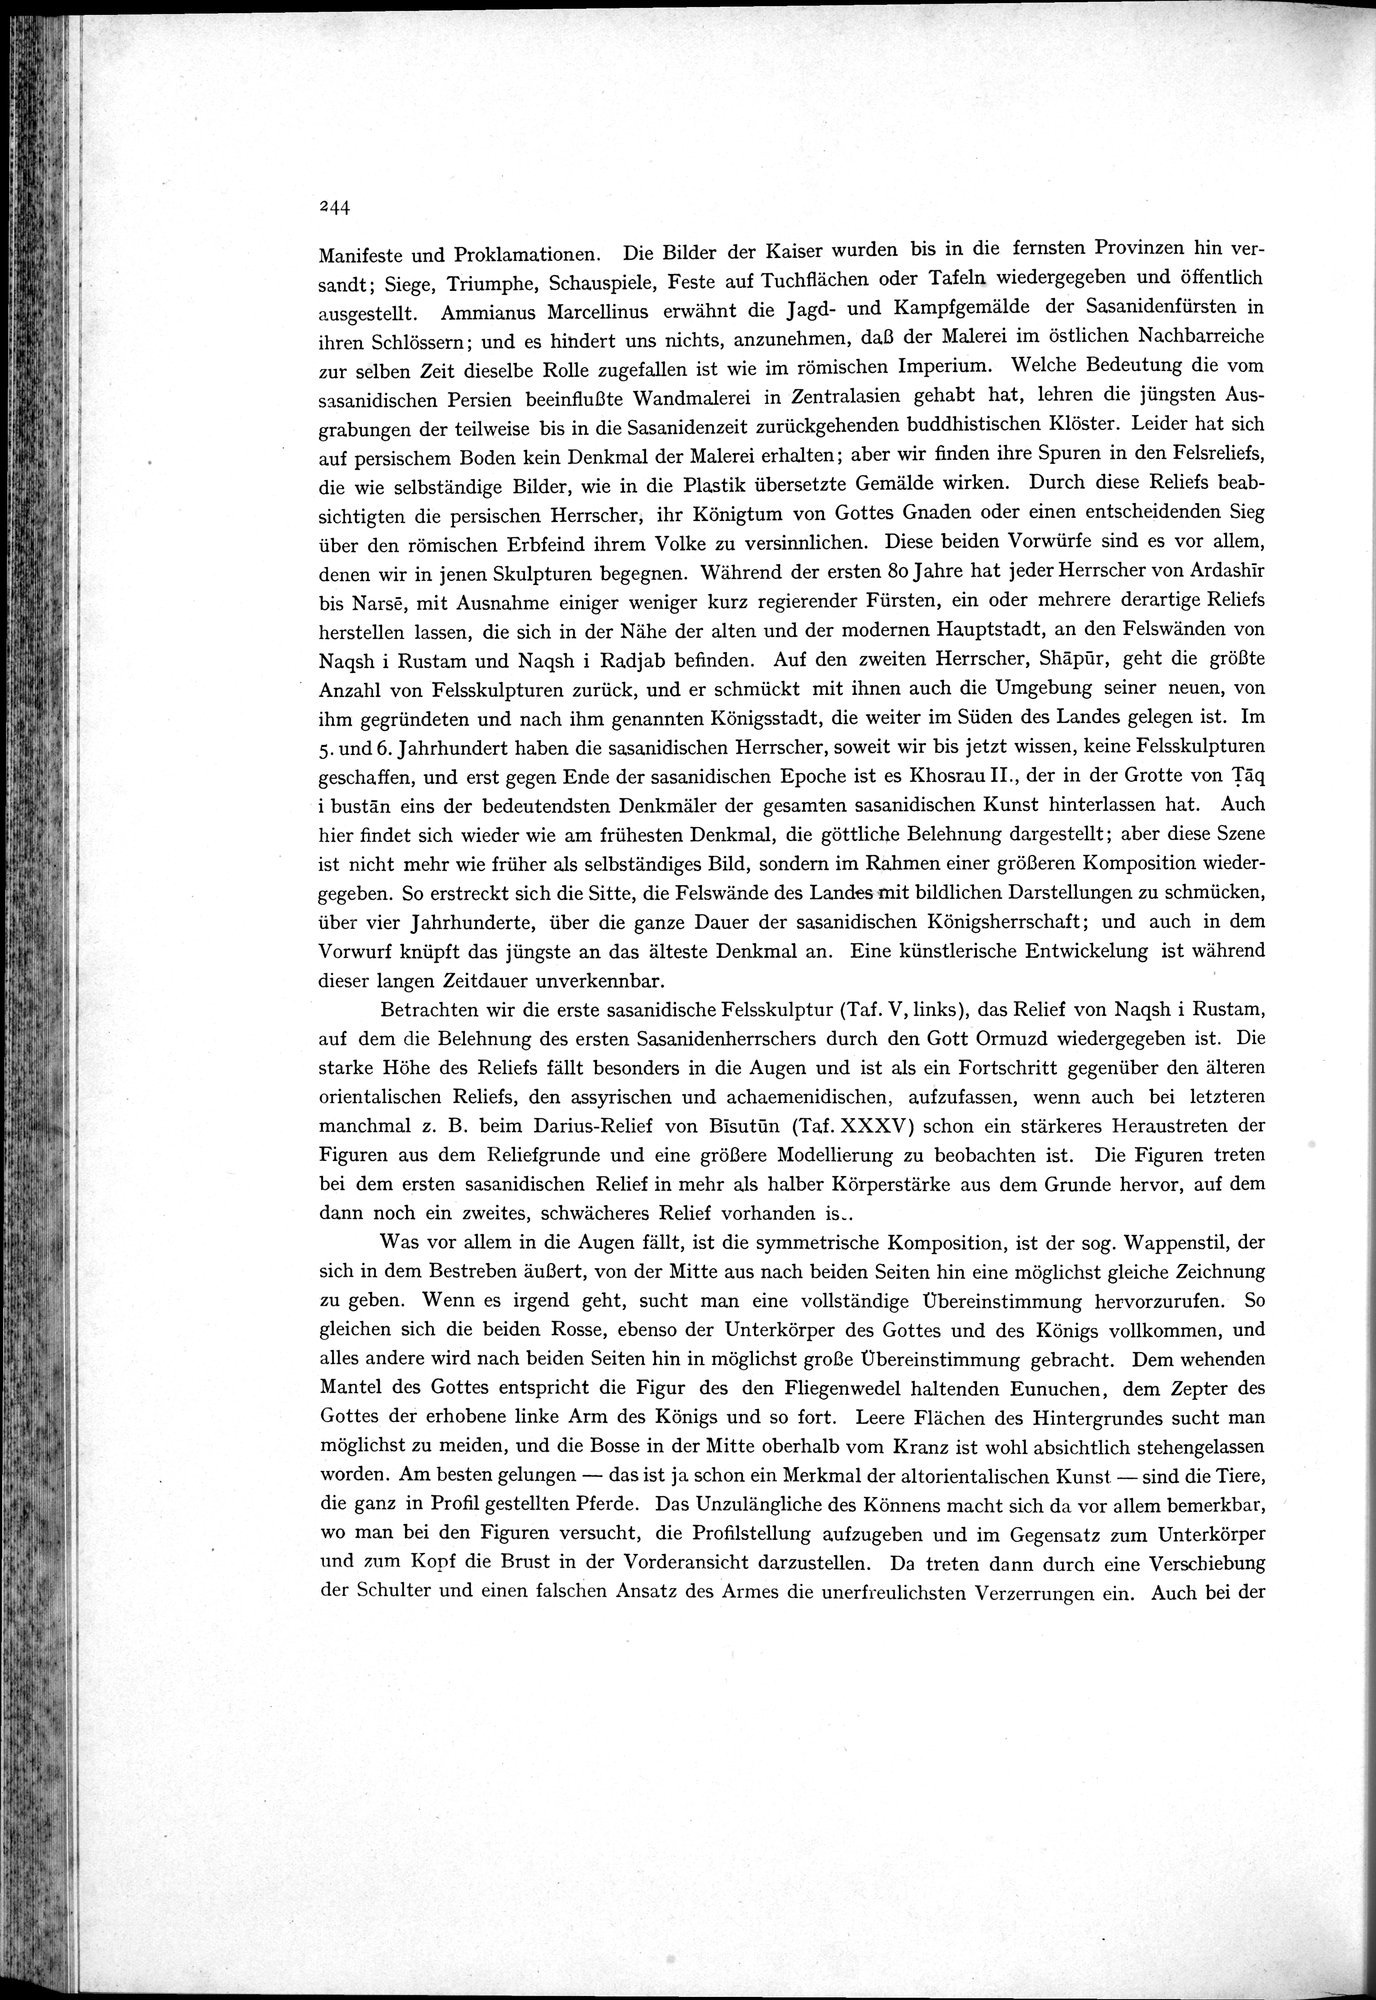 Iranische Felsreliefs : vol.1 / Page 256 (Grayscale High Resolution Image)